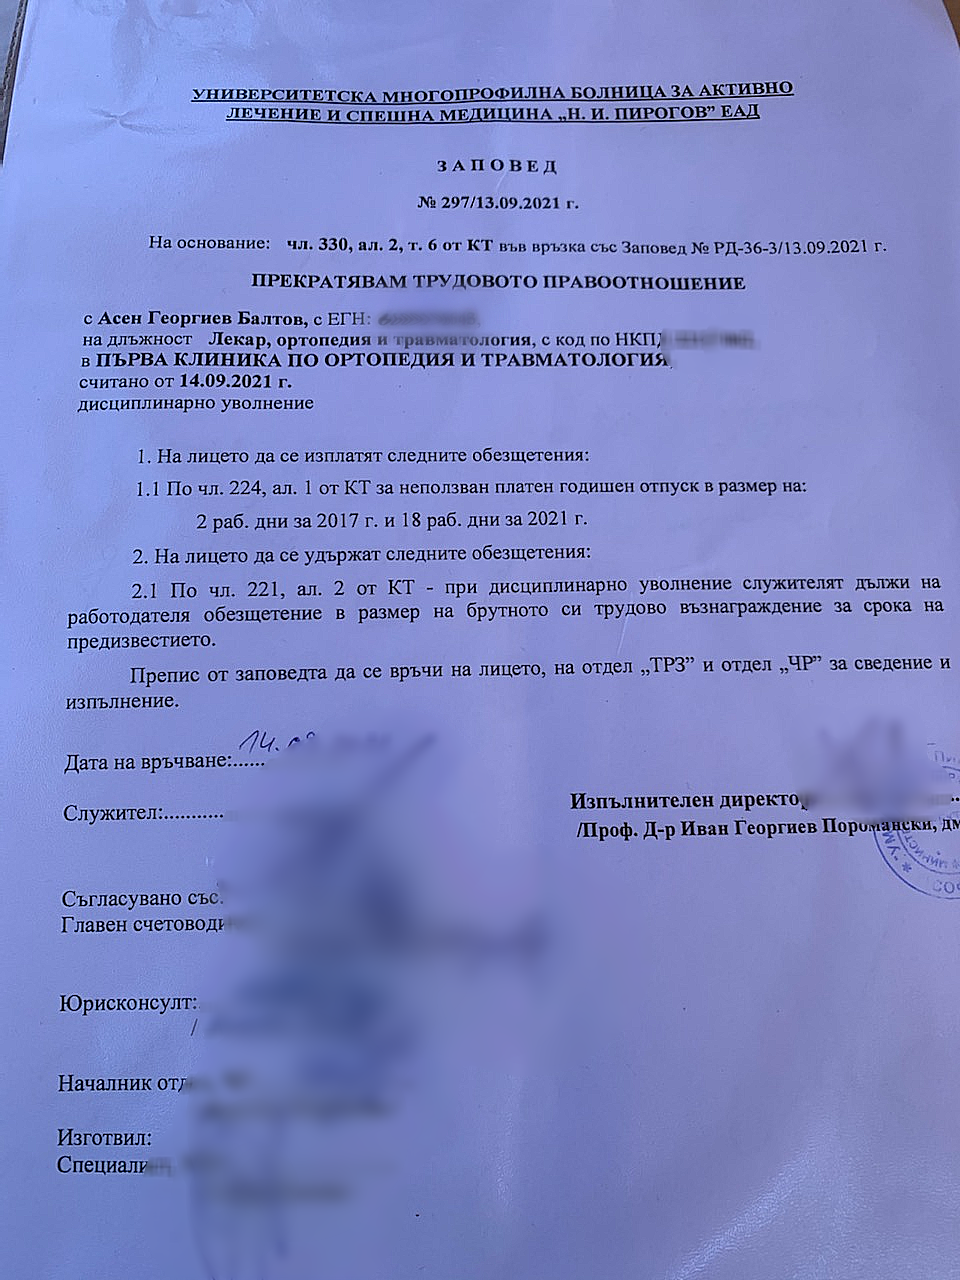 Заповедта за дисциплинарно уволнение на проф. Балтов